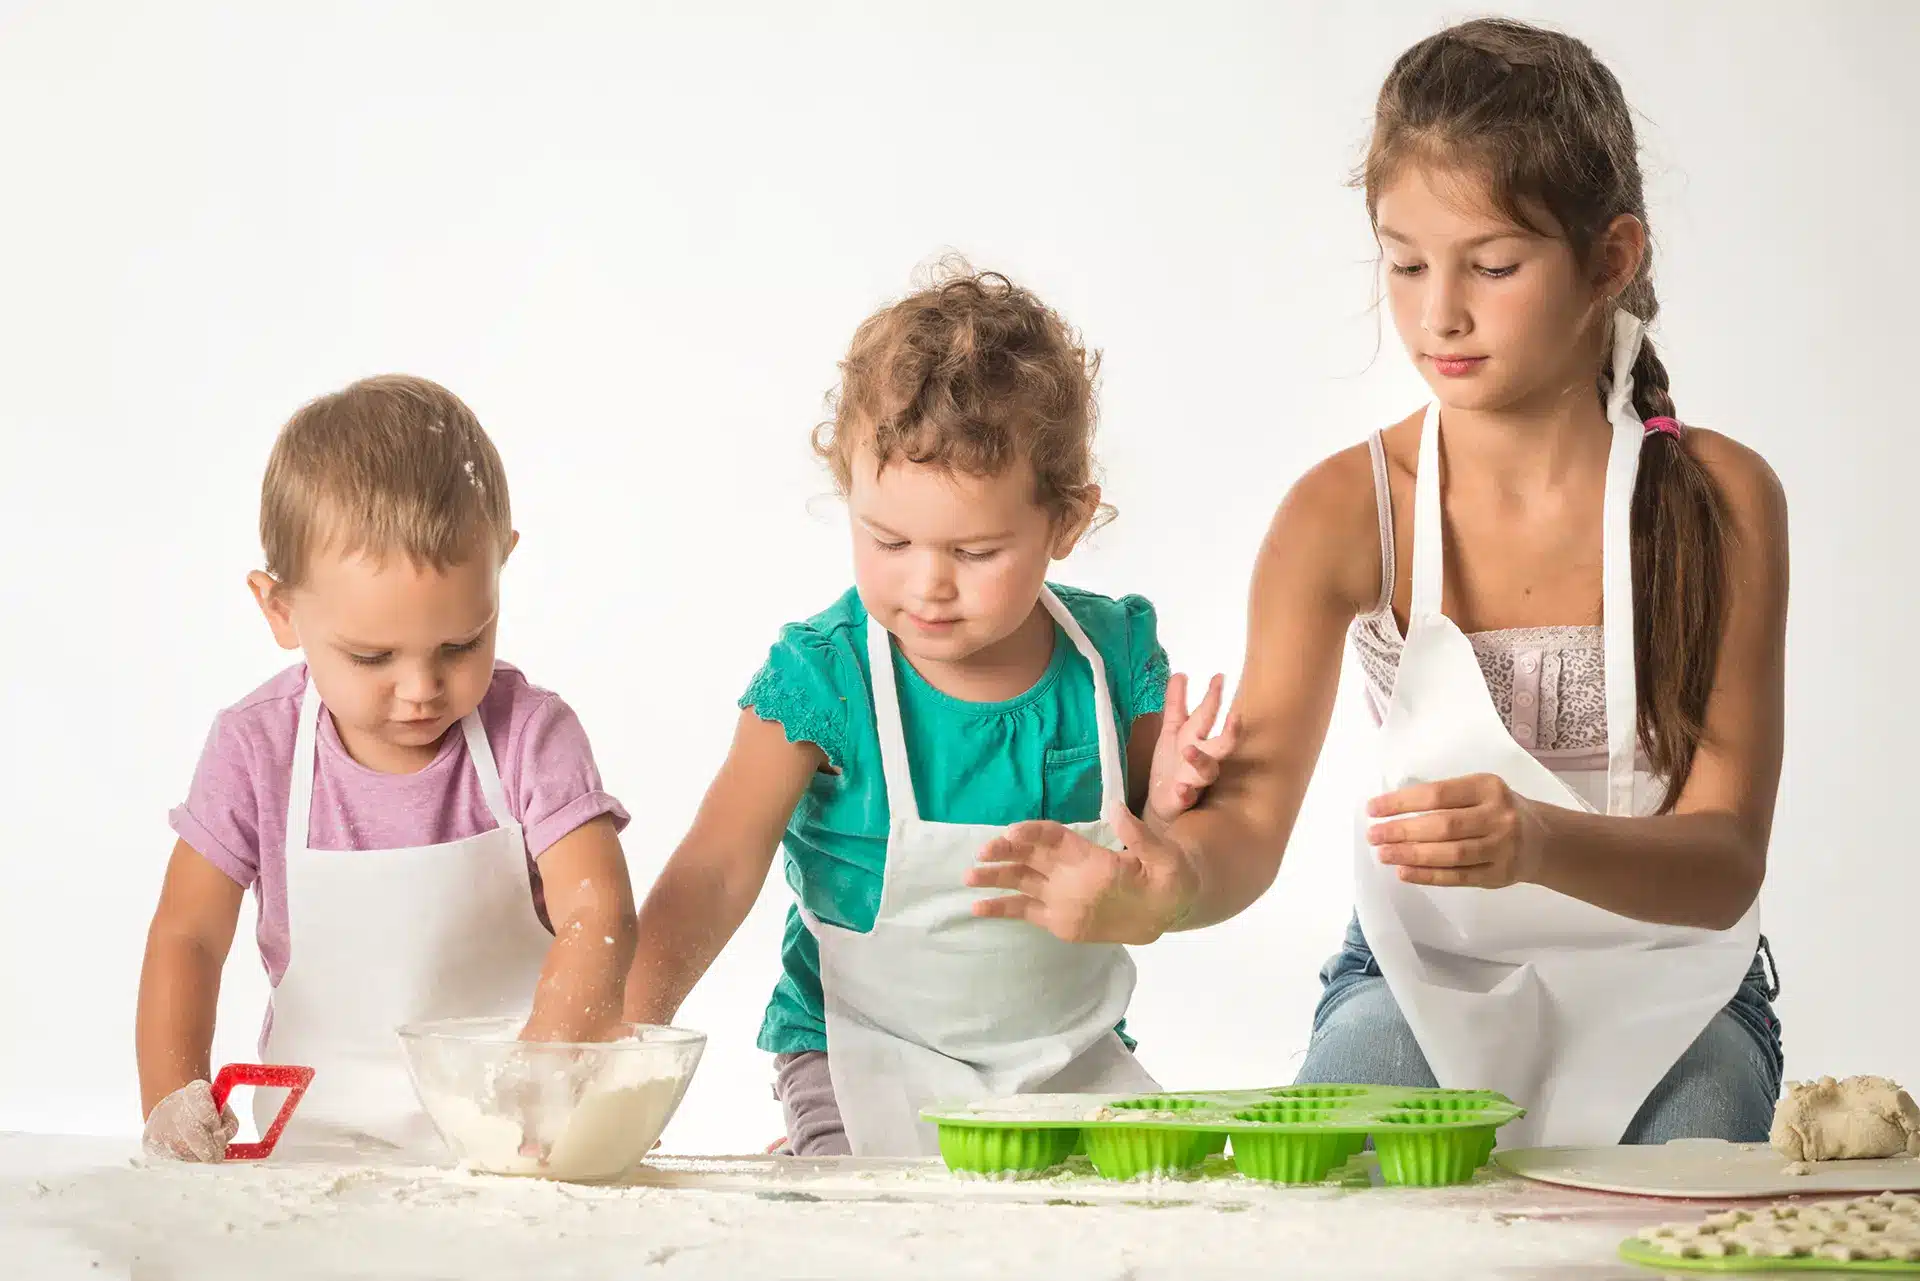 Montessori games to develop children's autonomy, 3 children prepare a cake on their own